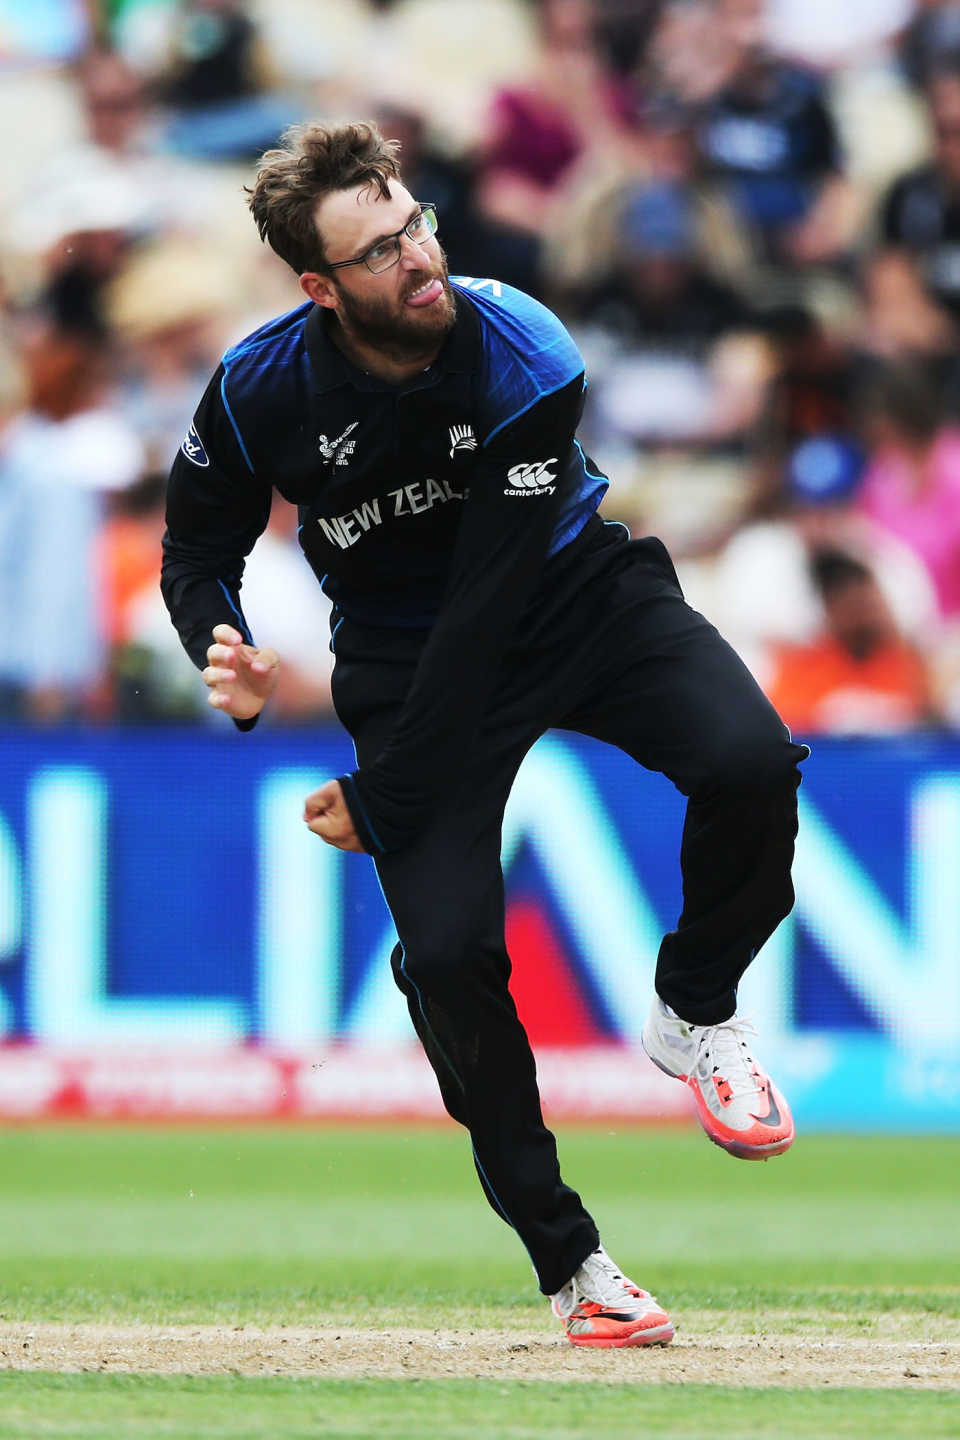 Daniel Vettori of New Zealand bowls, New Zealand v Bangladesh, World Cup 2015, Seddon Park, Hamilton, New Zealand, March 13, 2015